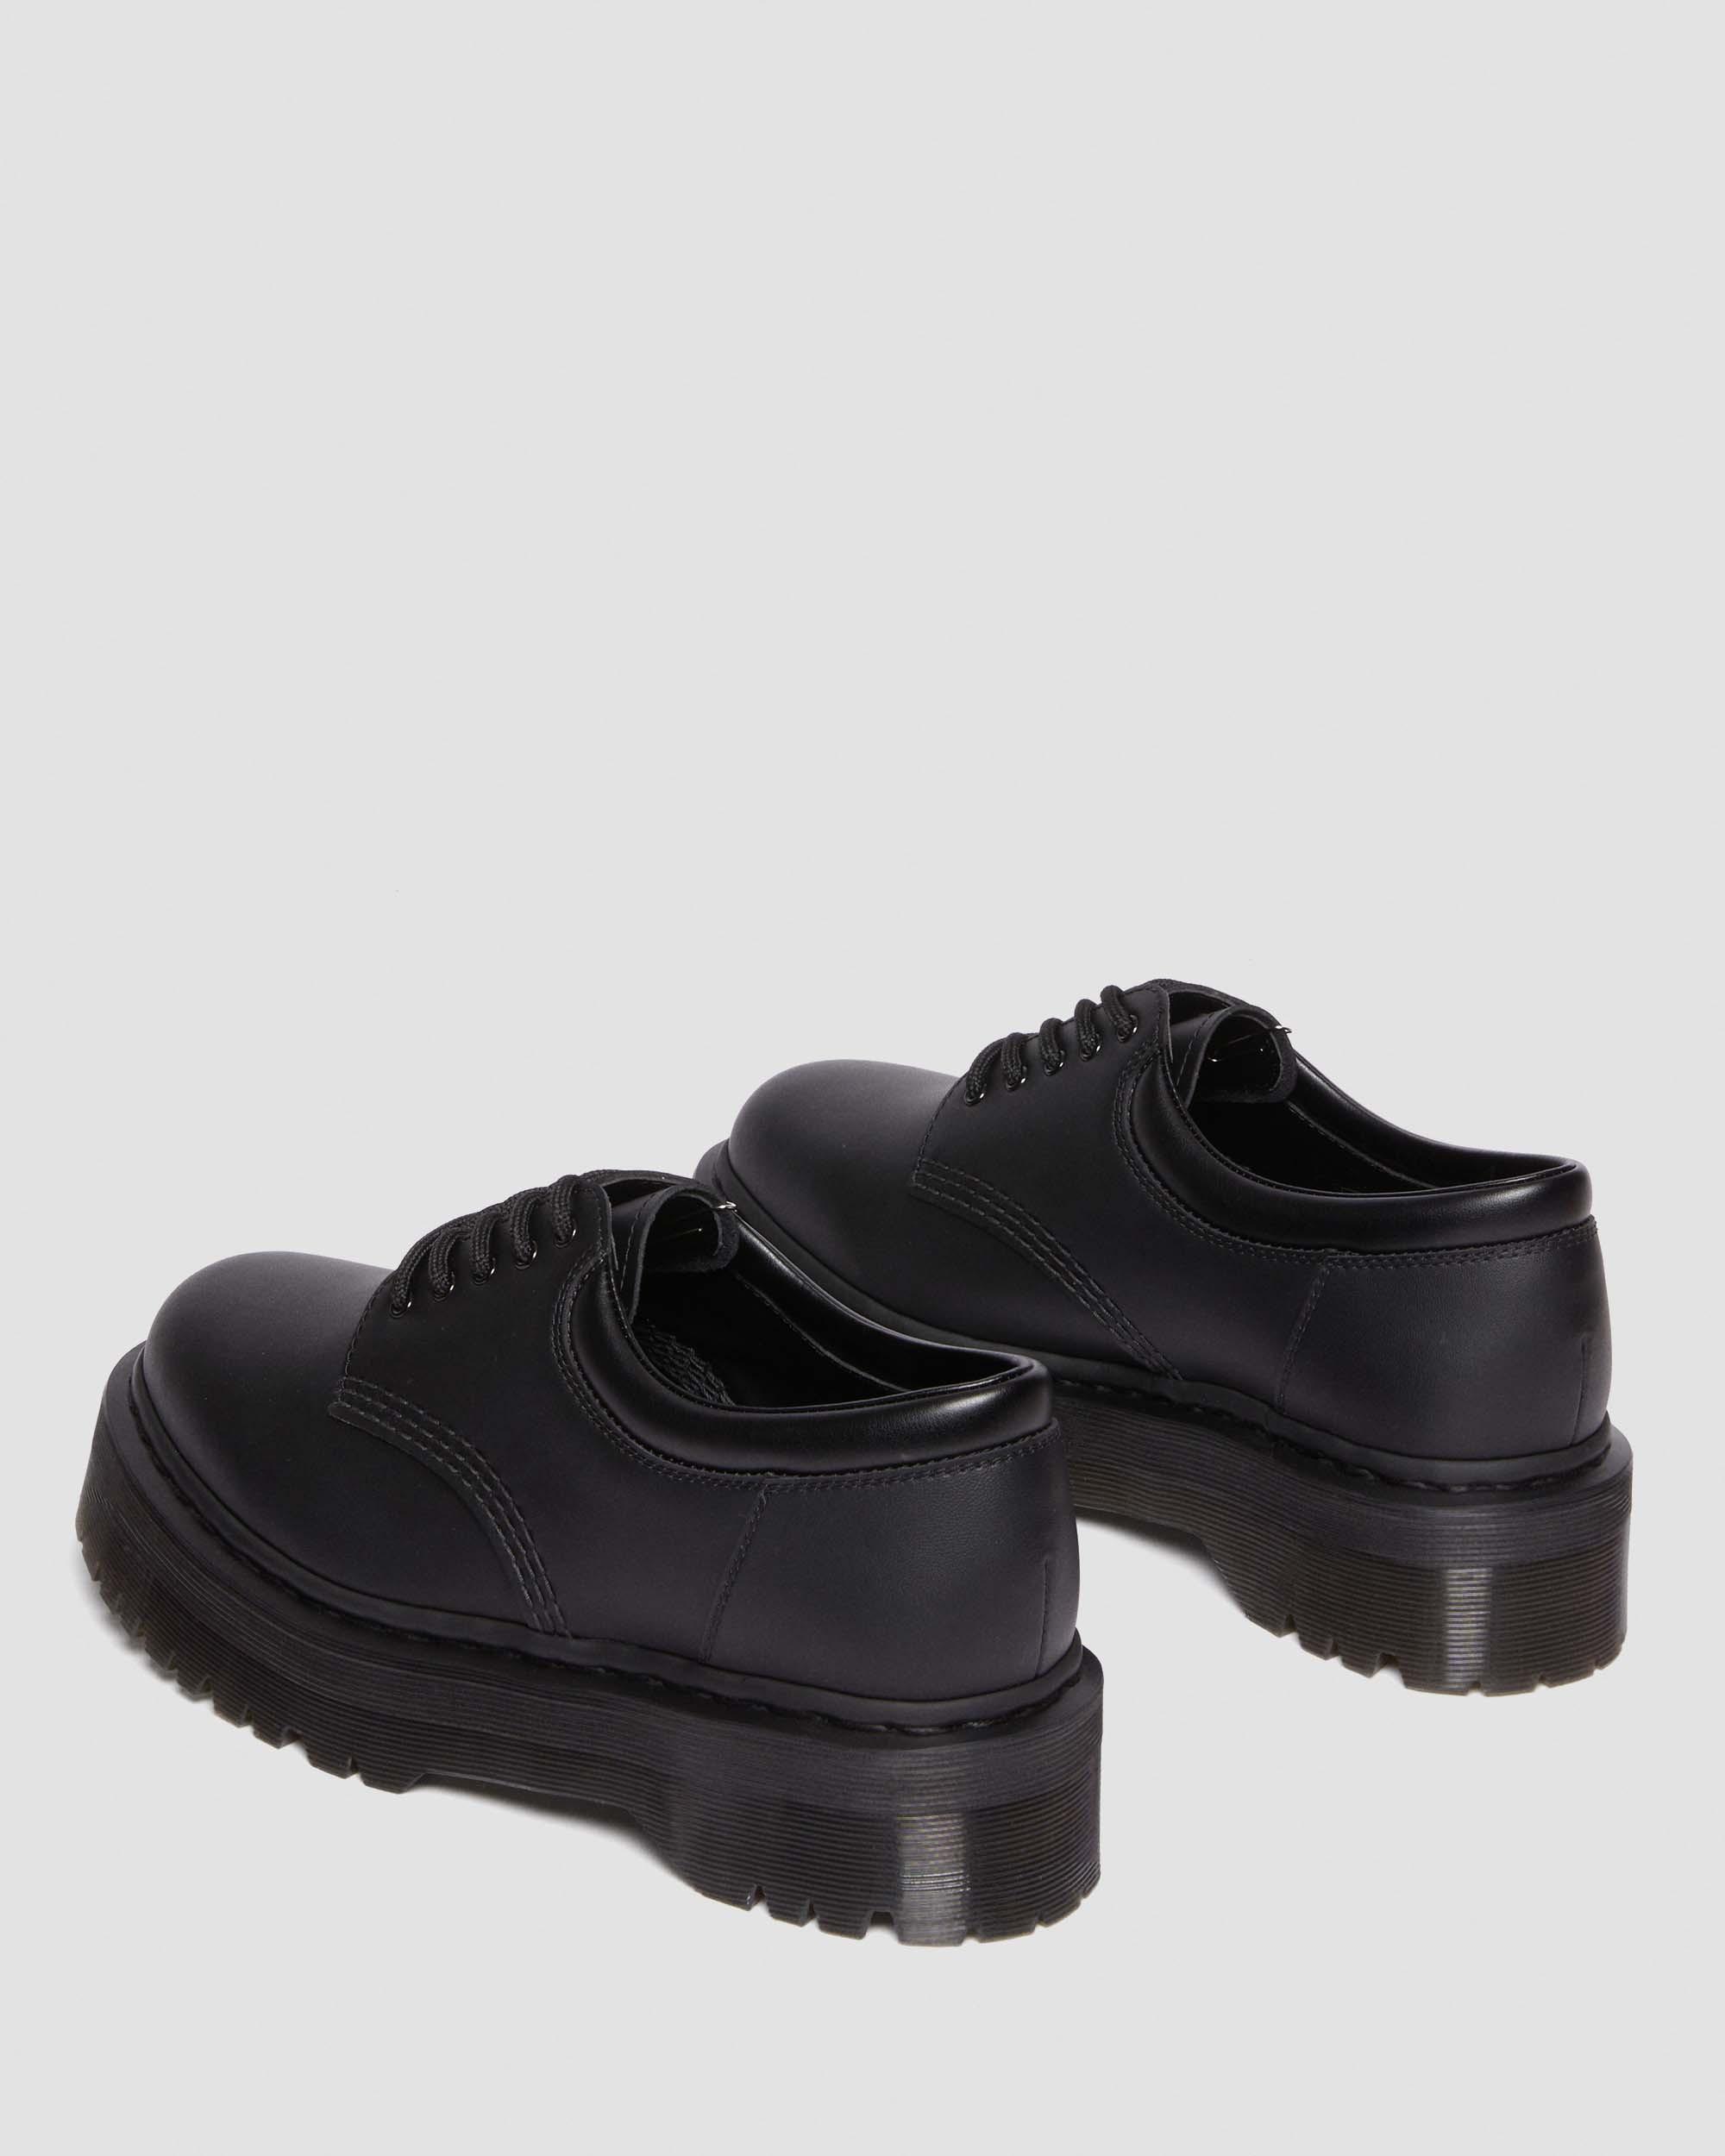 Vegan 8053 Quad Mono Leather Shoes in Black | Dr. Martens